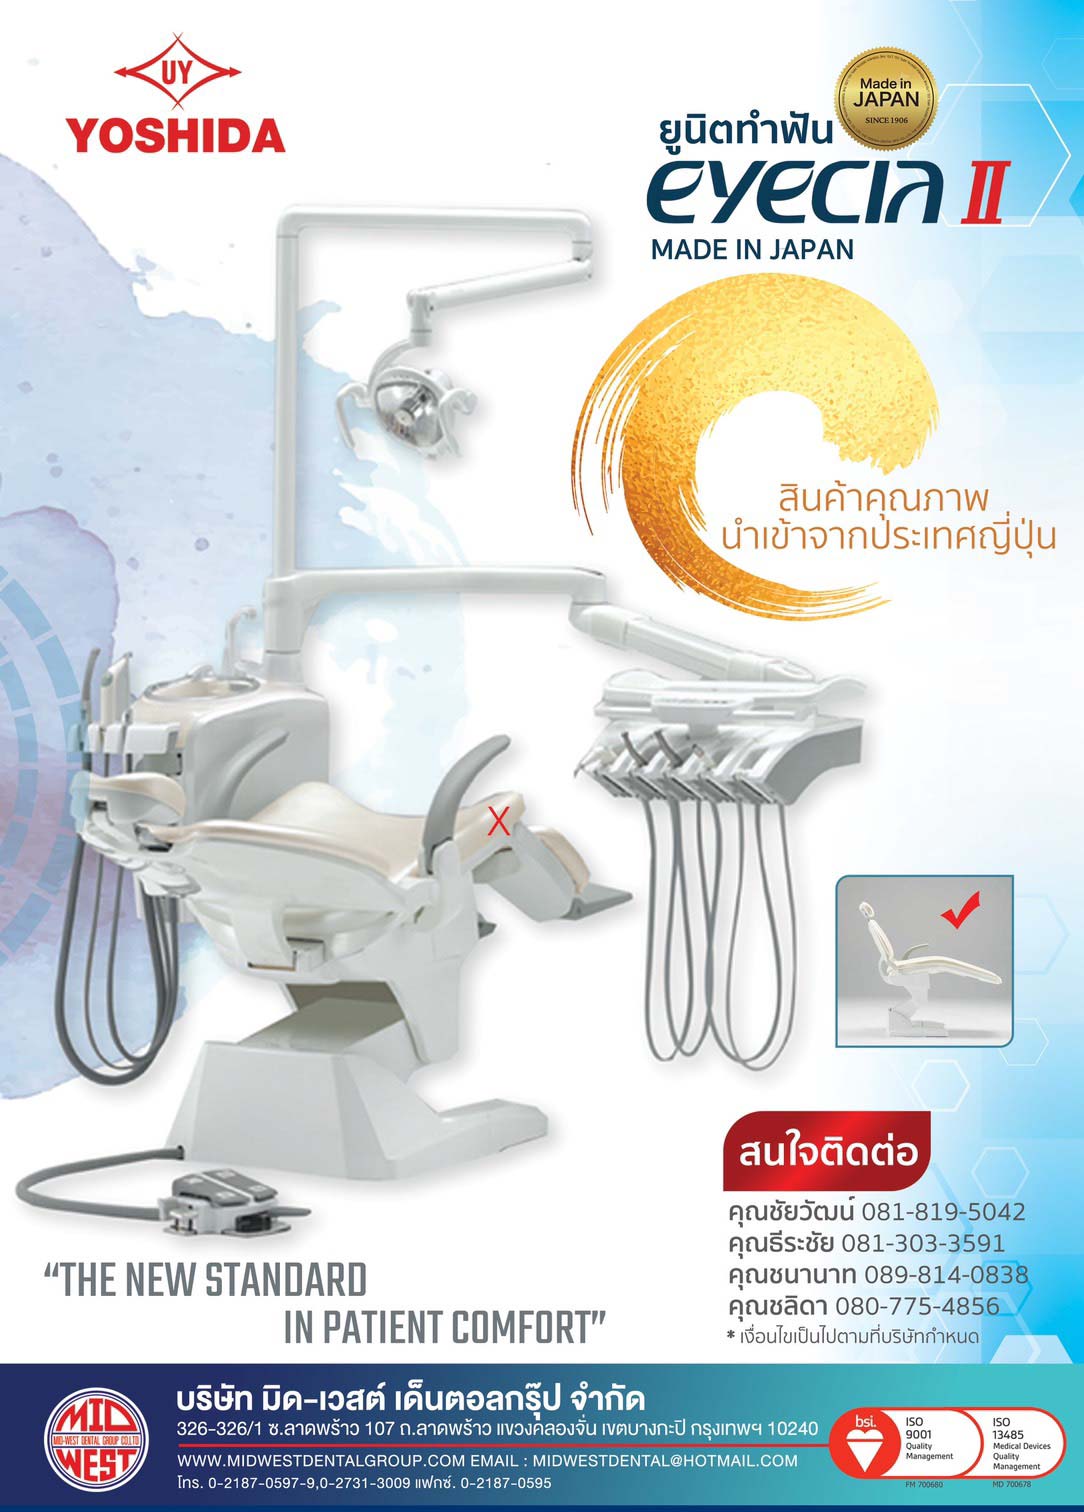 Yoshida EyeCia II "The new standrad in patient comfort"